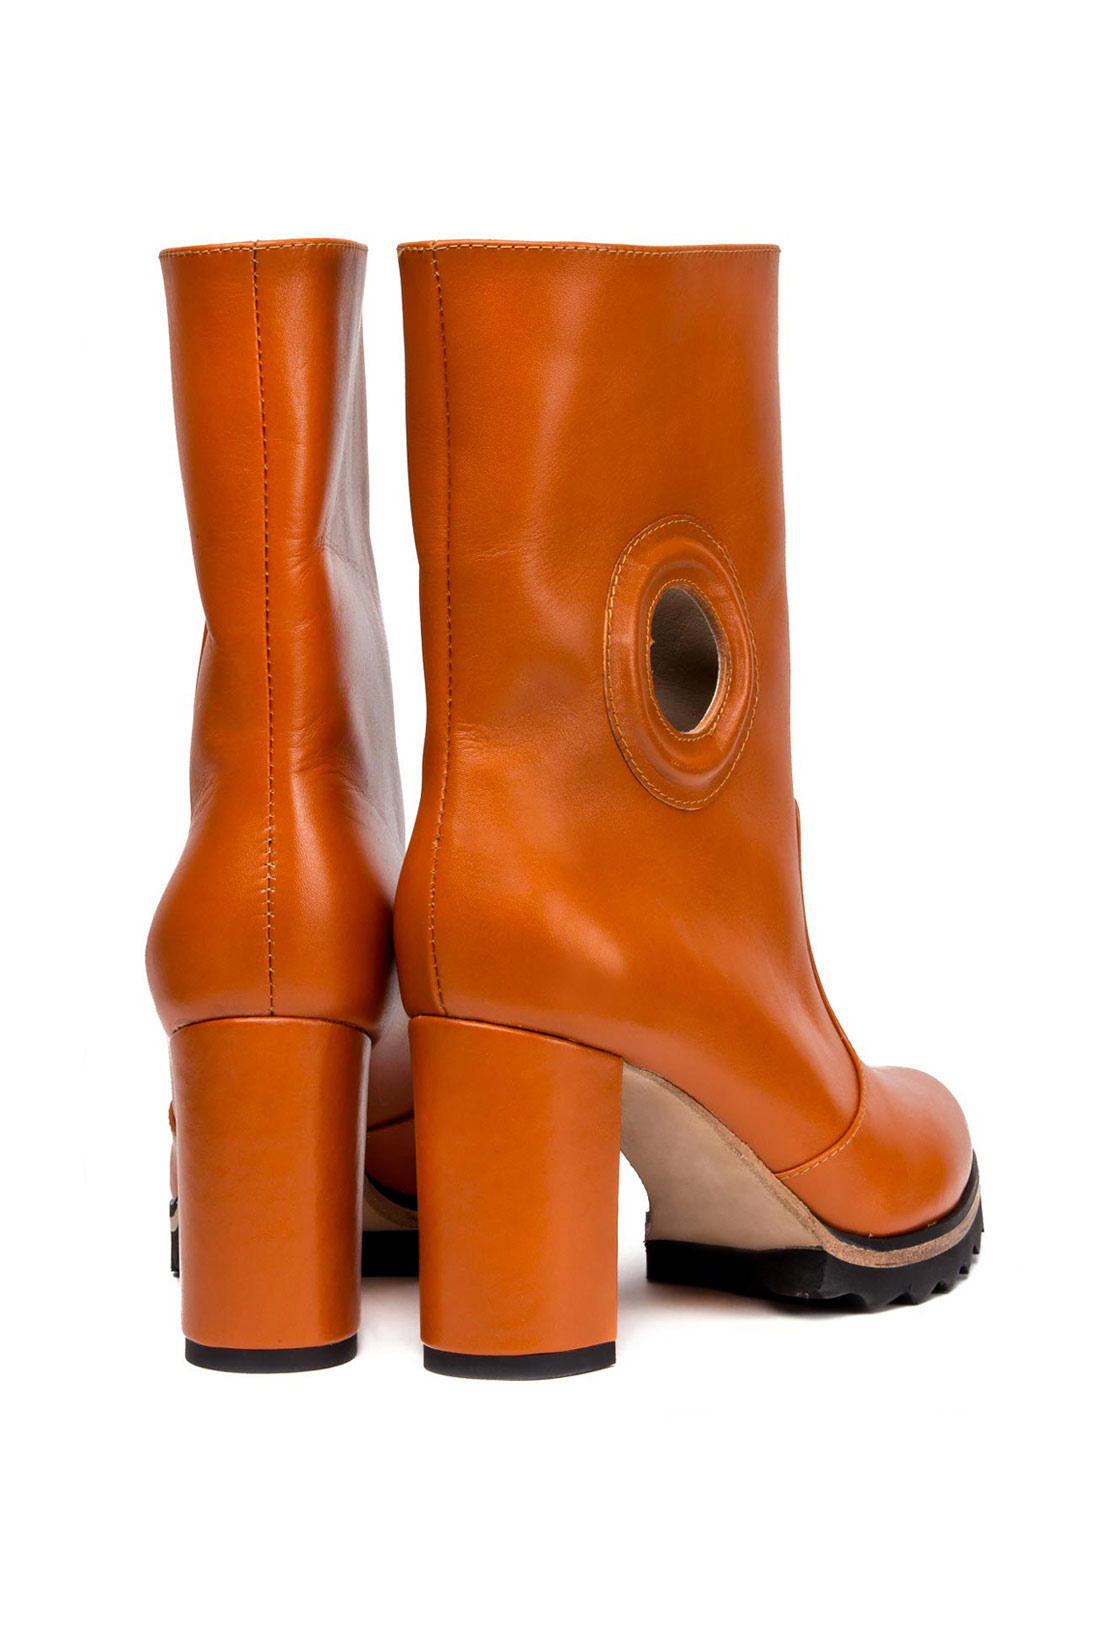 Leather boots with decoupage Mihaela Glavan  image 2